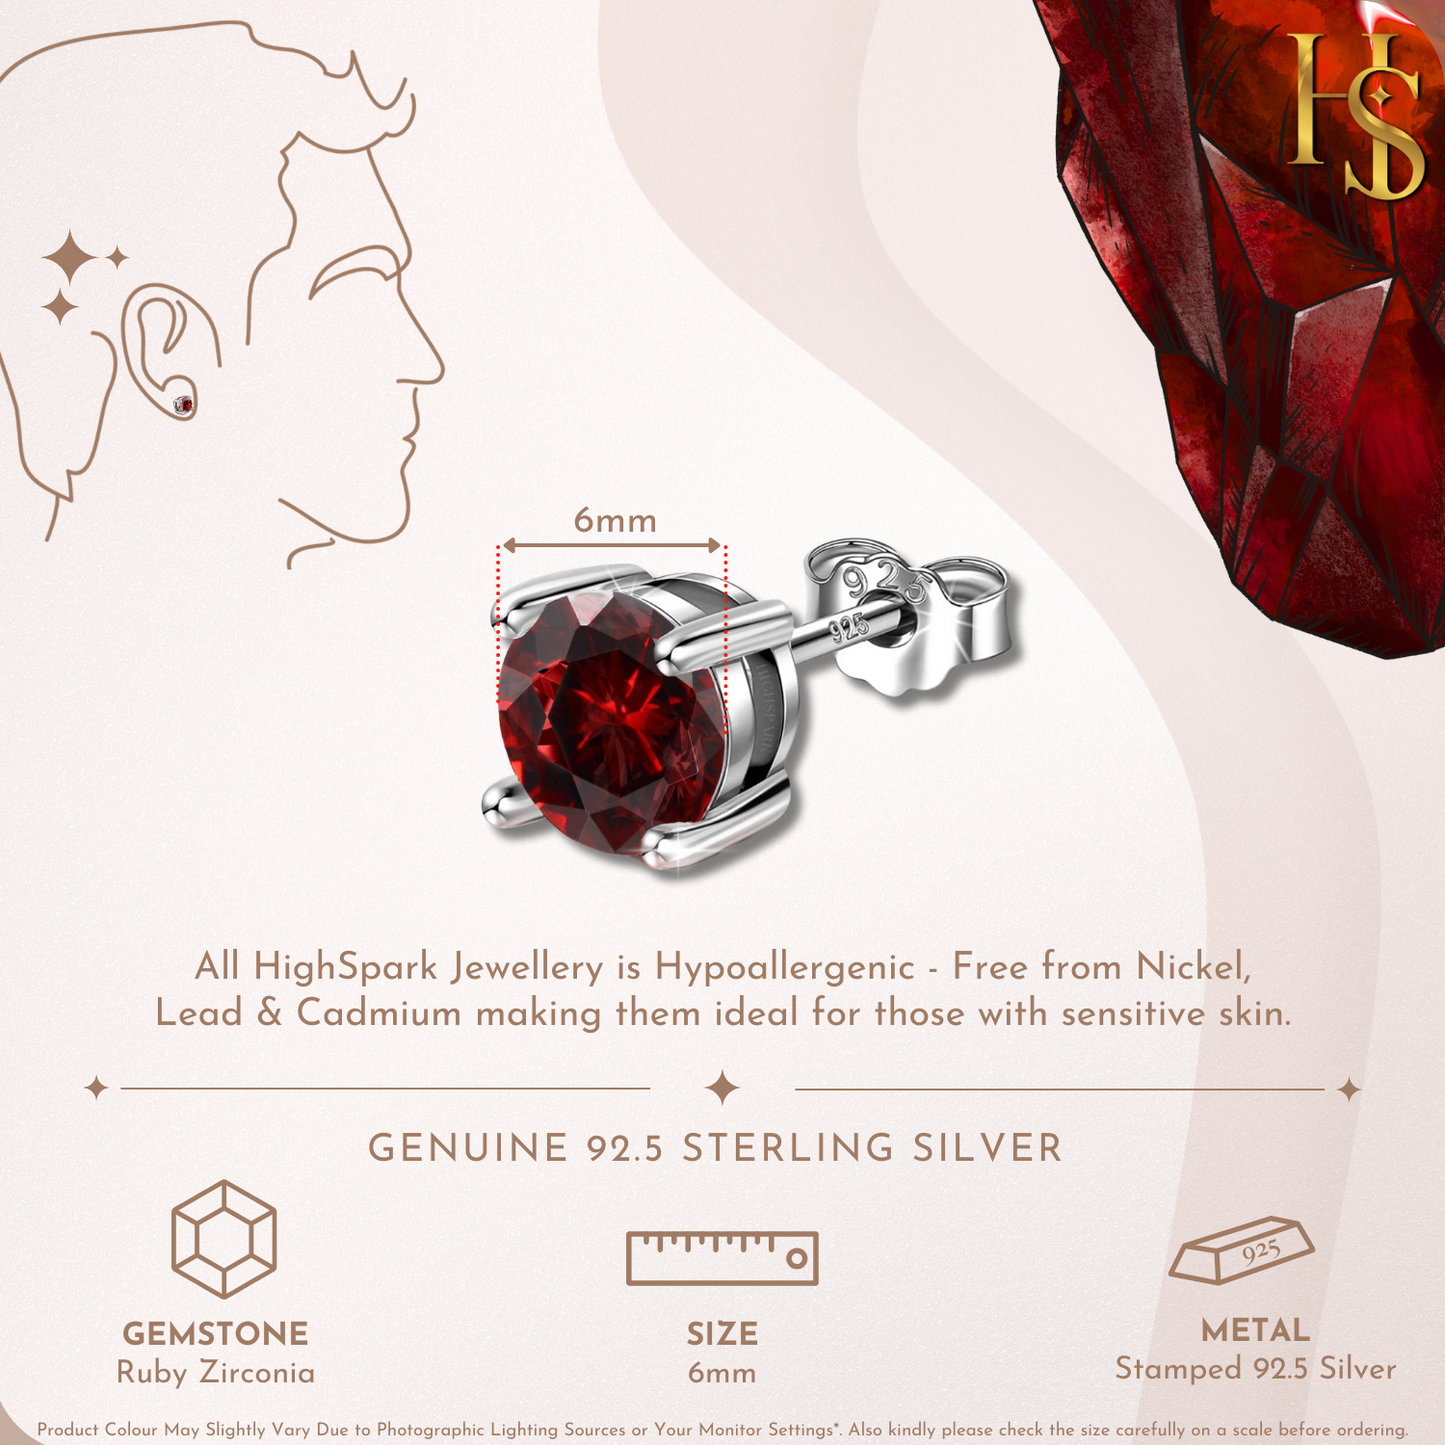 Men's Solitaire Stud Earring - 925 Silver - Birthstone July Ruby Zirconia - 1 Piece